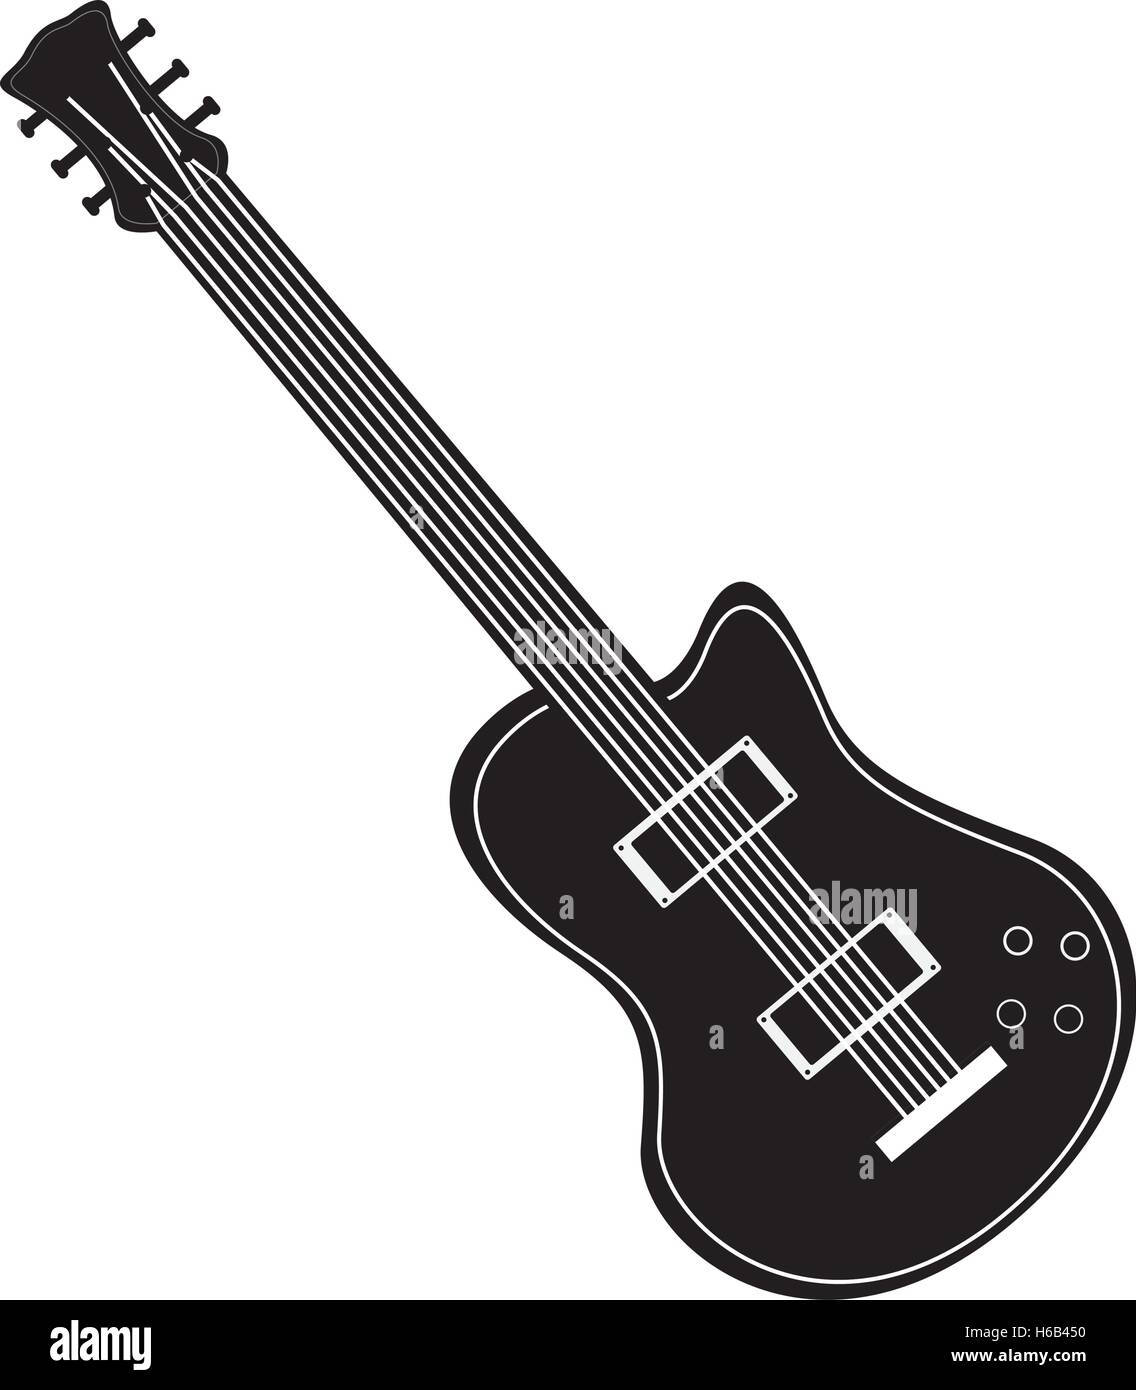 guitar icon image Stock Vector